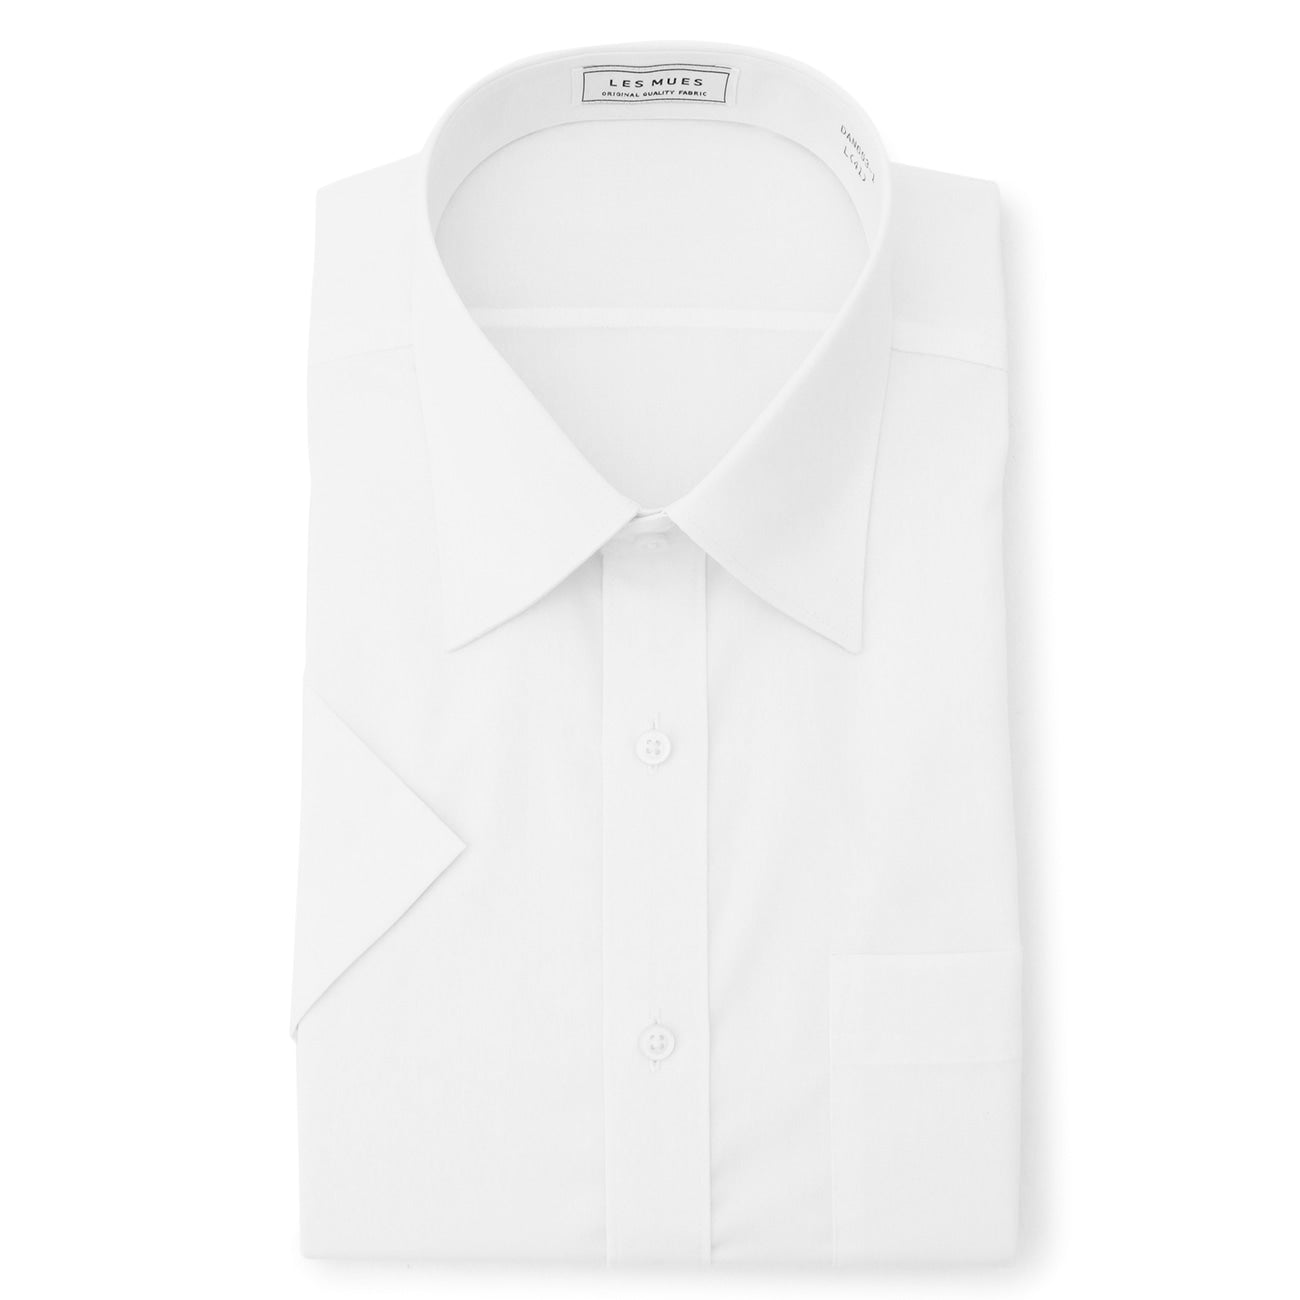 Aircool Non-iron Regular Collar Short Sleeve Shirt